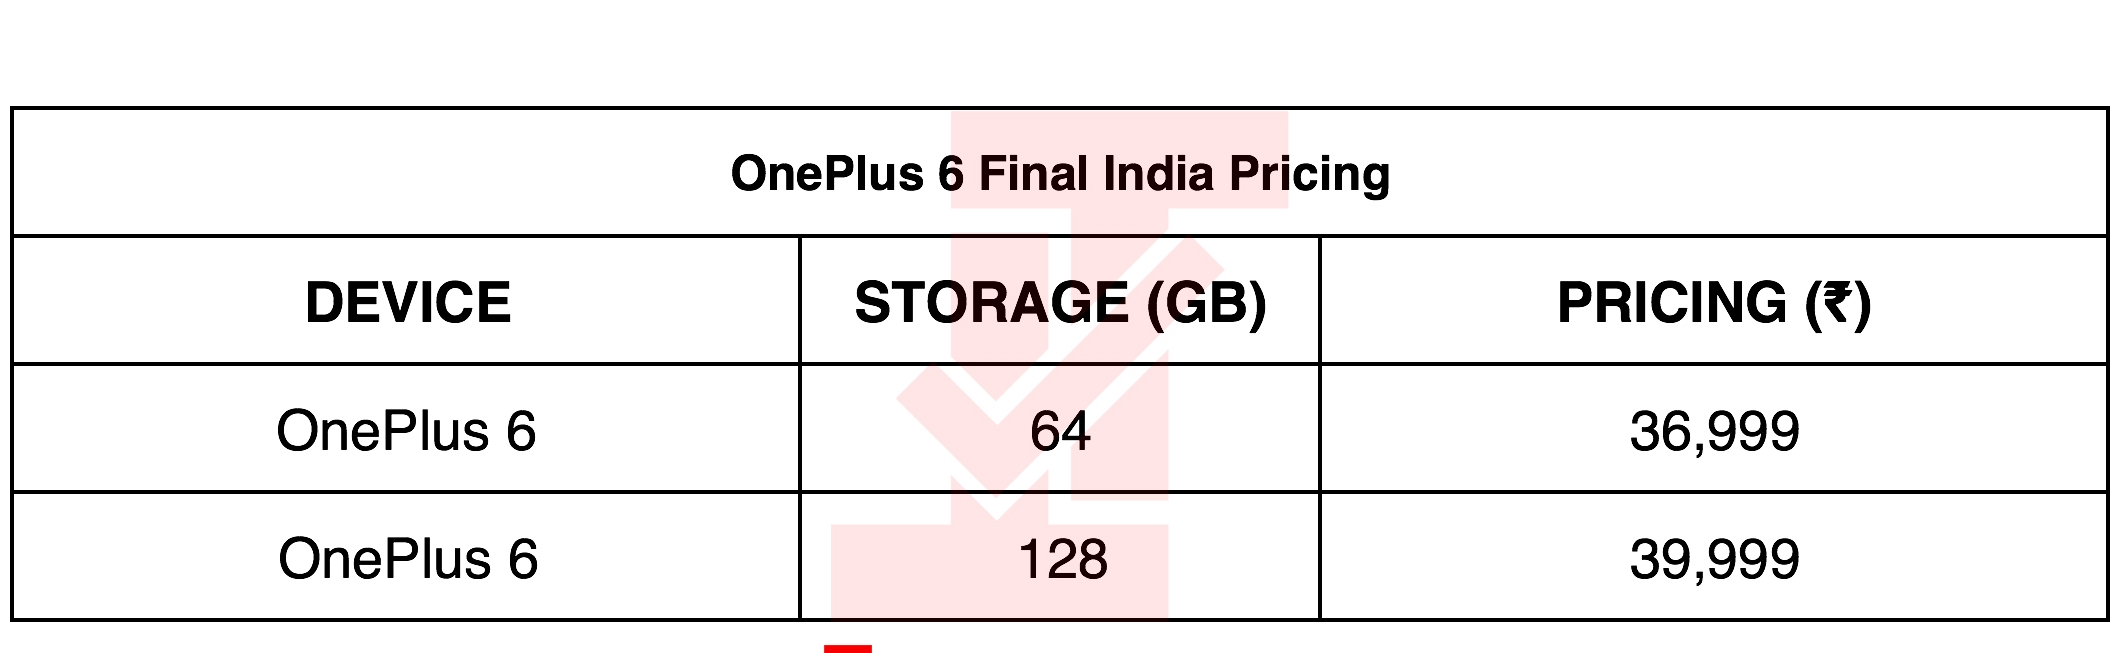 oneplus 6 starting price rumored to be around rs. 37,000 in india